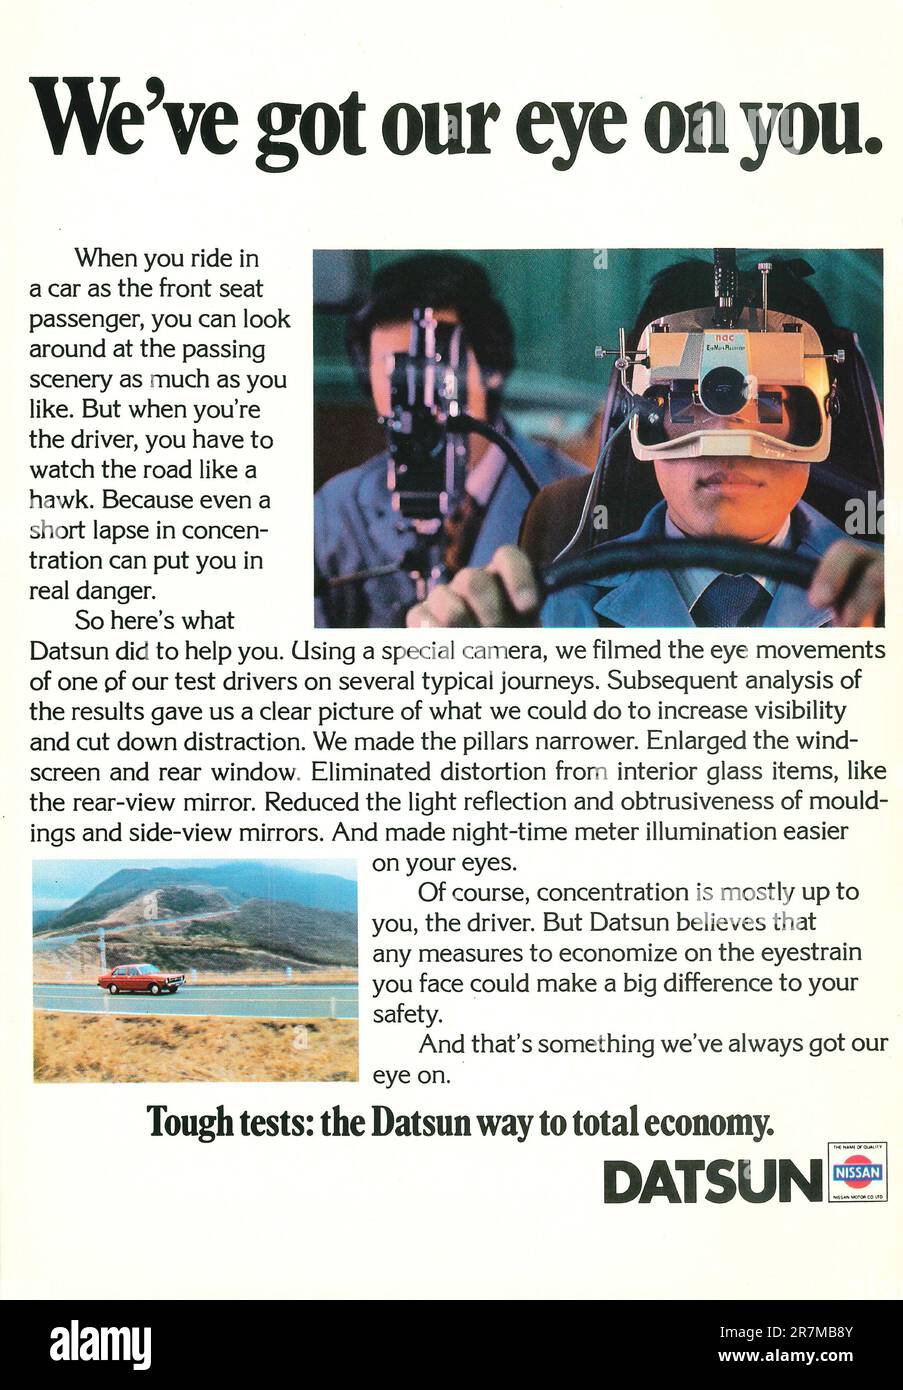 Datsun eye movements technology advert in a magazine 1978 Stock Photo